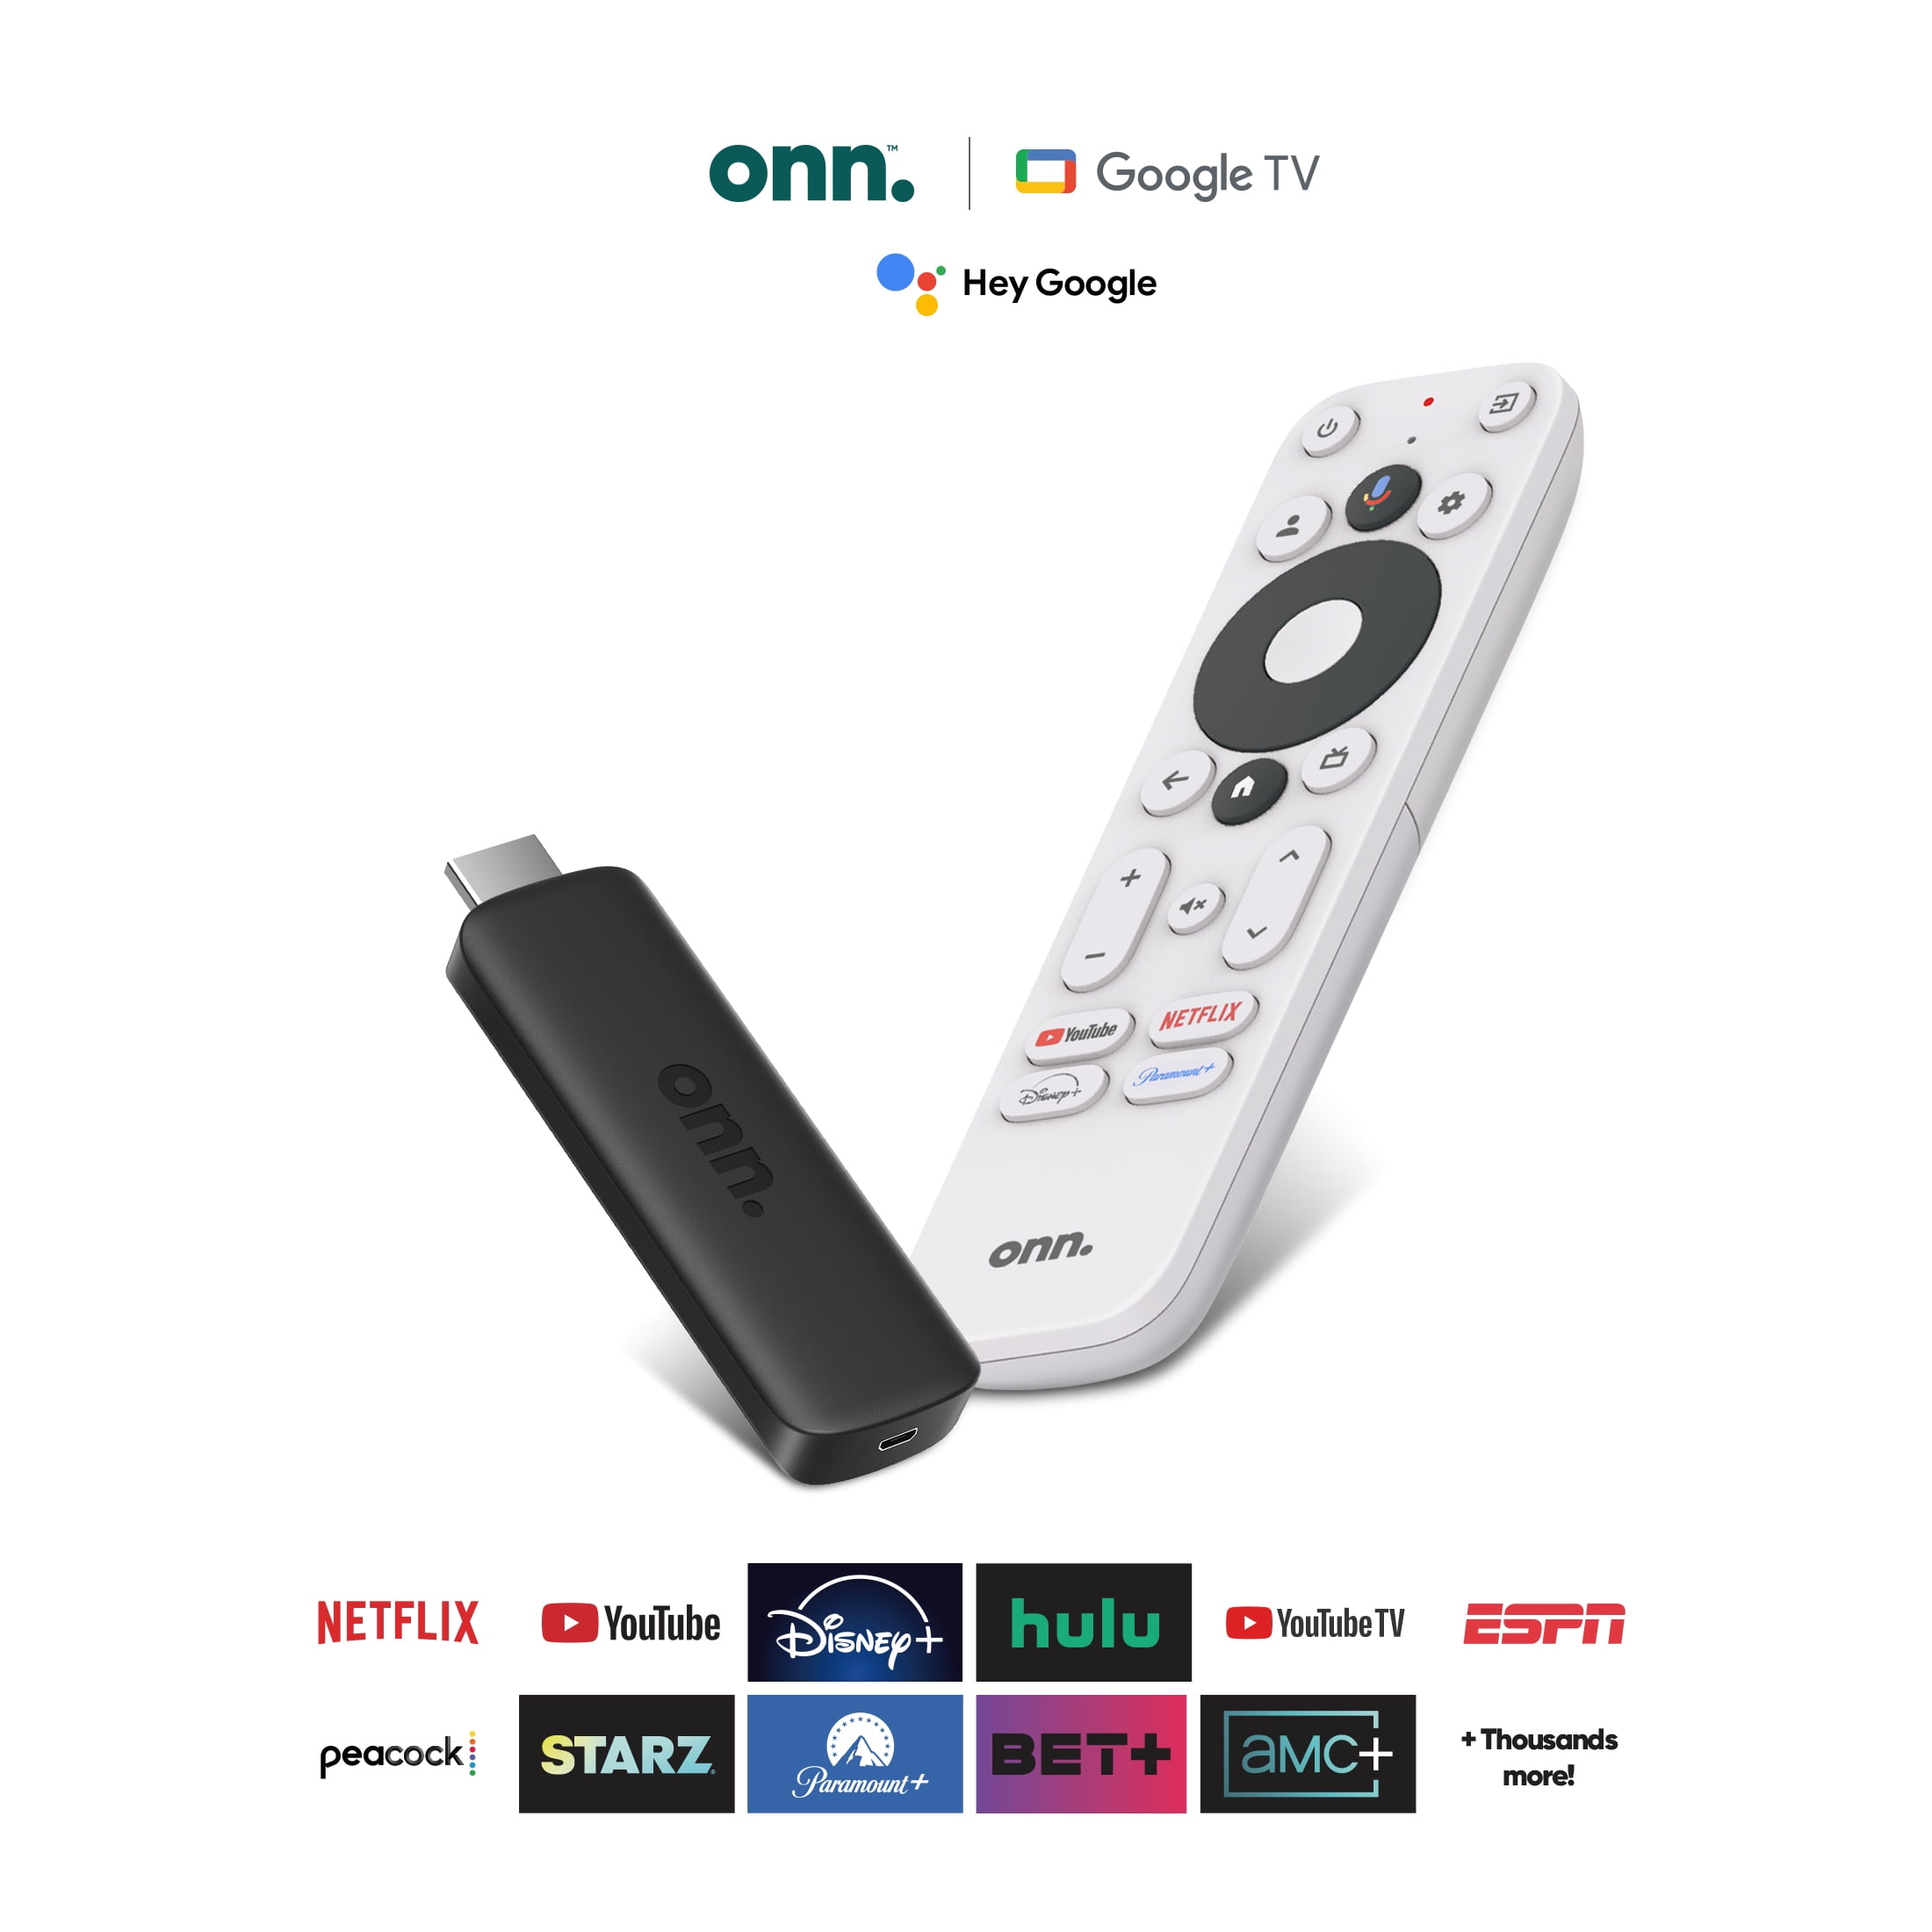 Chromecast con Google TV G454V / G9N9N 1080p